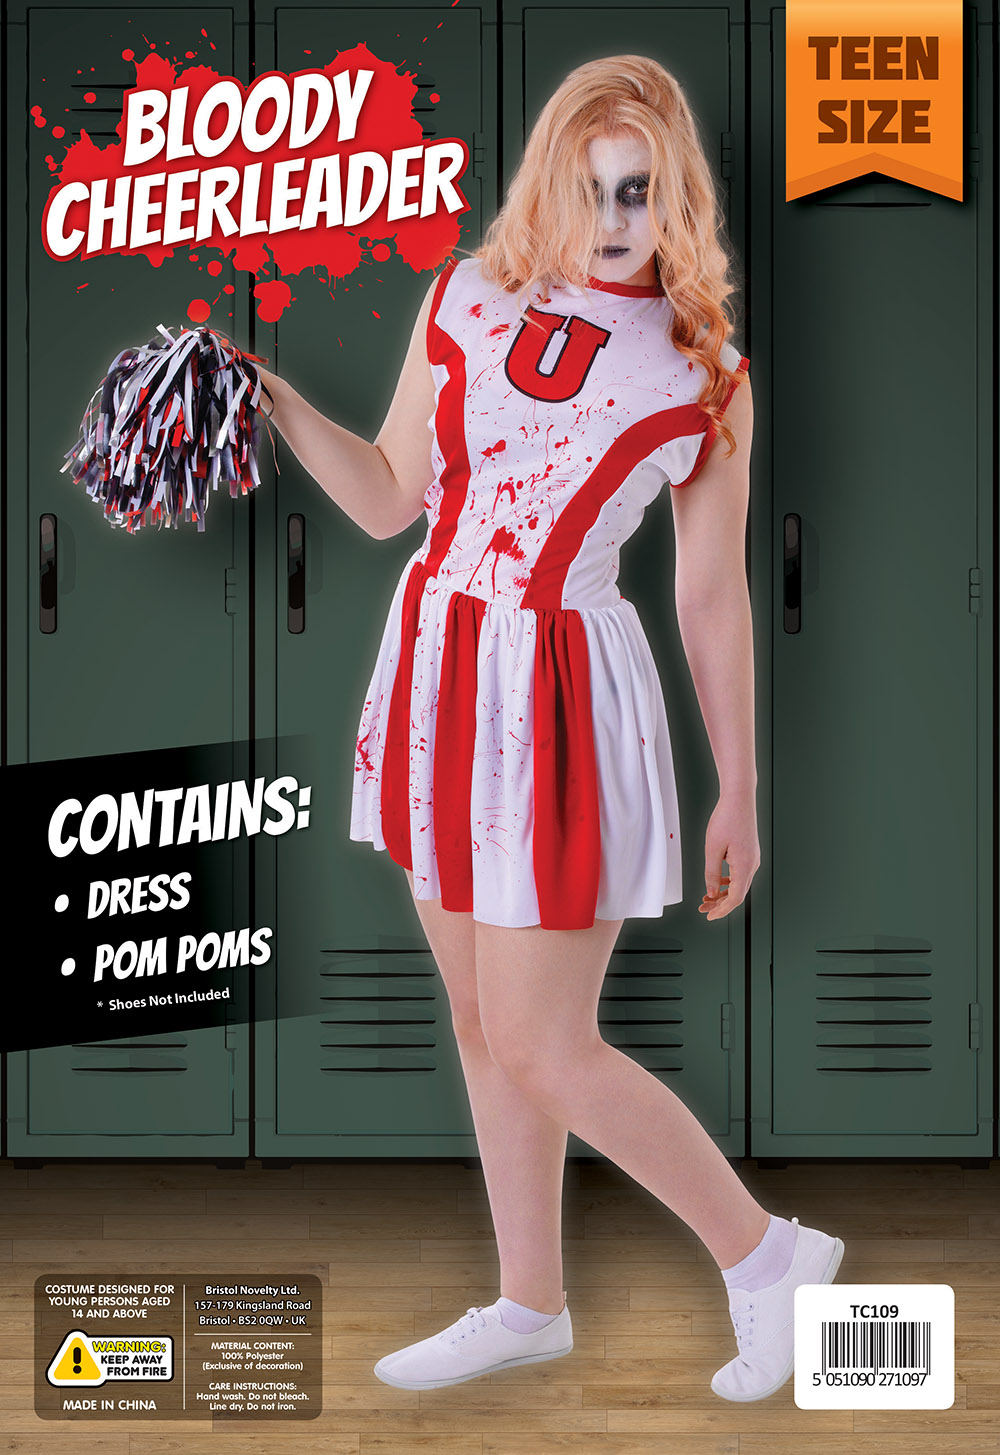 Cheerleader Bloody with Pom Pom